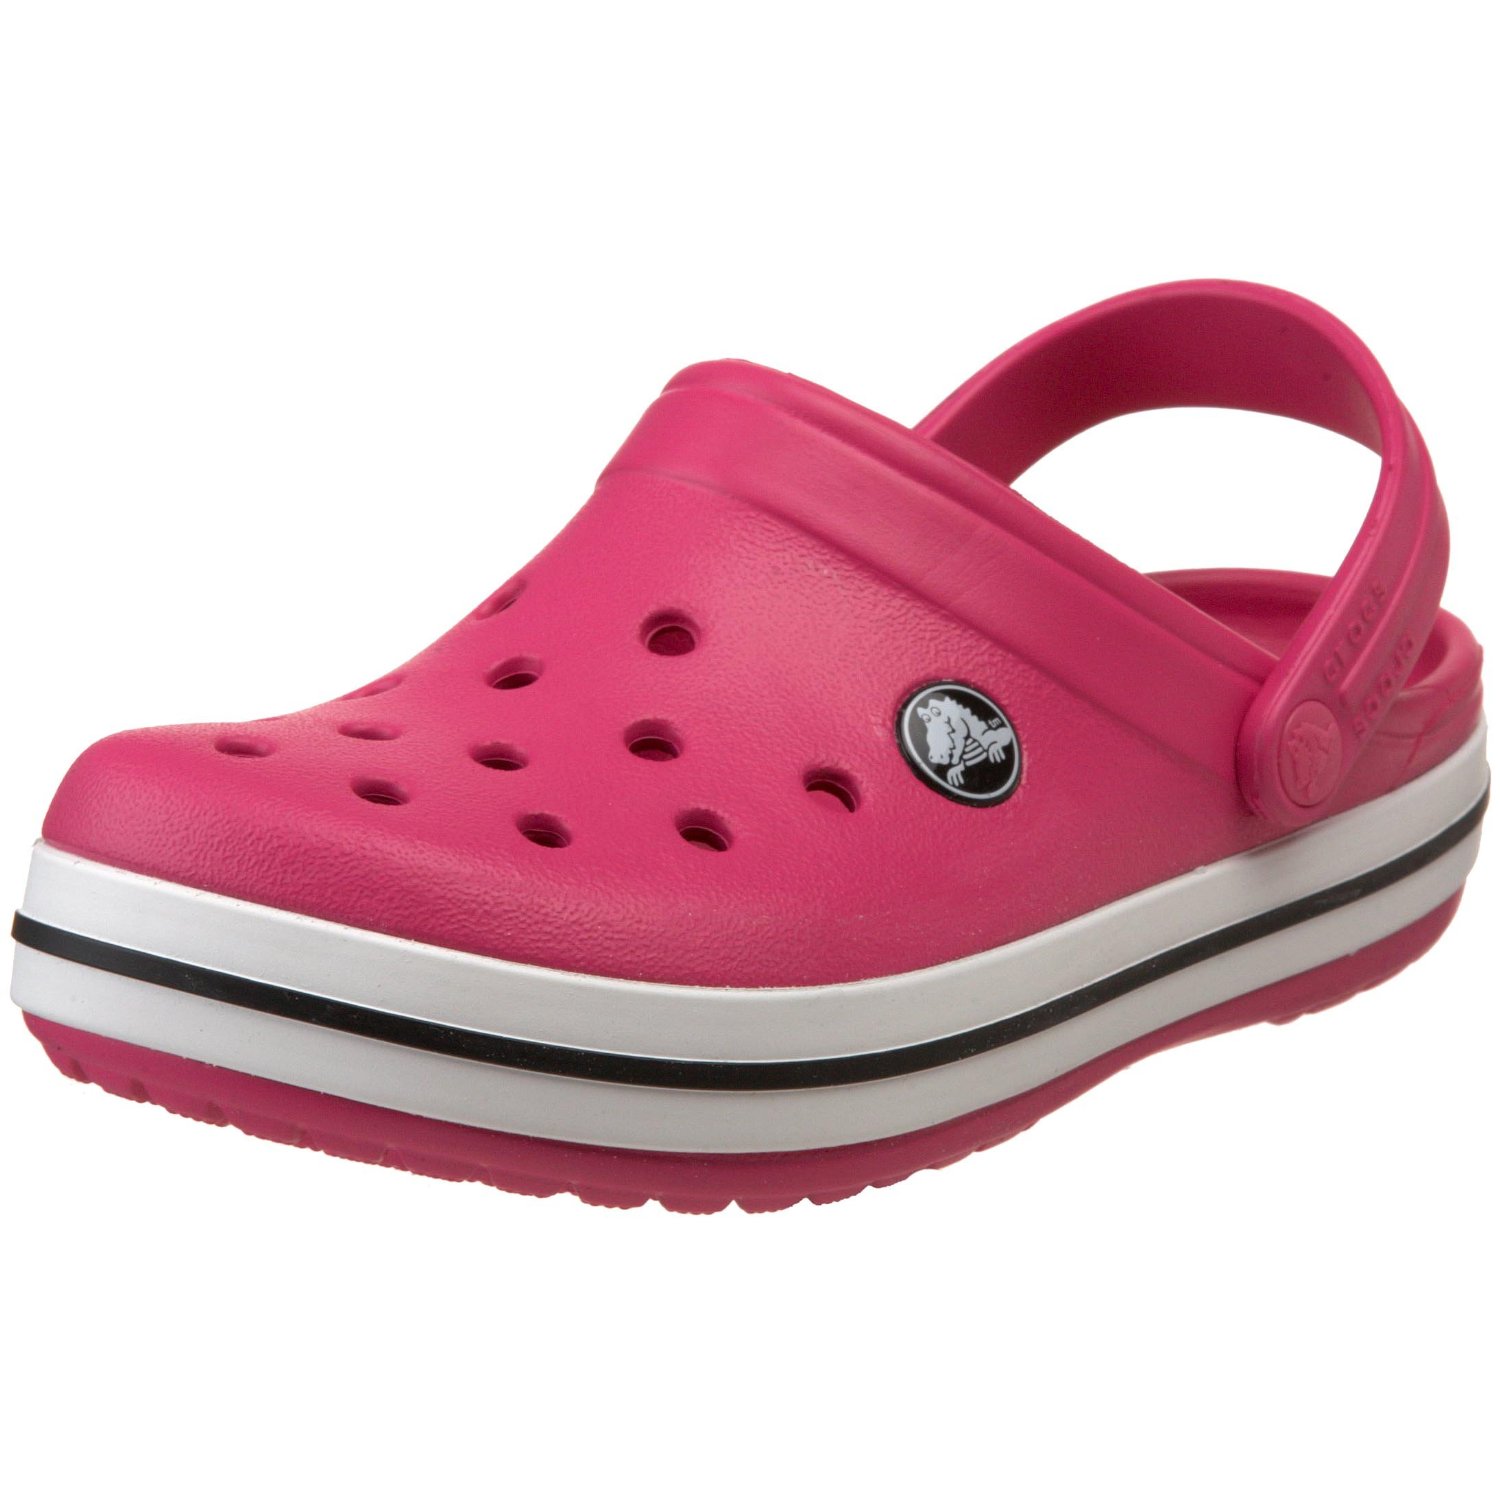  Crocs  Shoes  Crocs  Crocband Clog Toddler Little Kid  